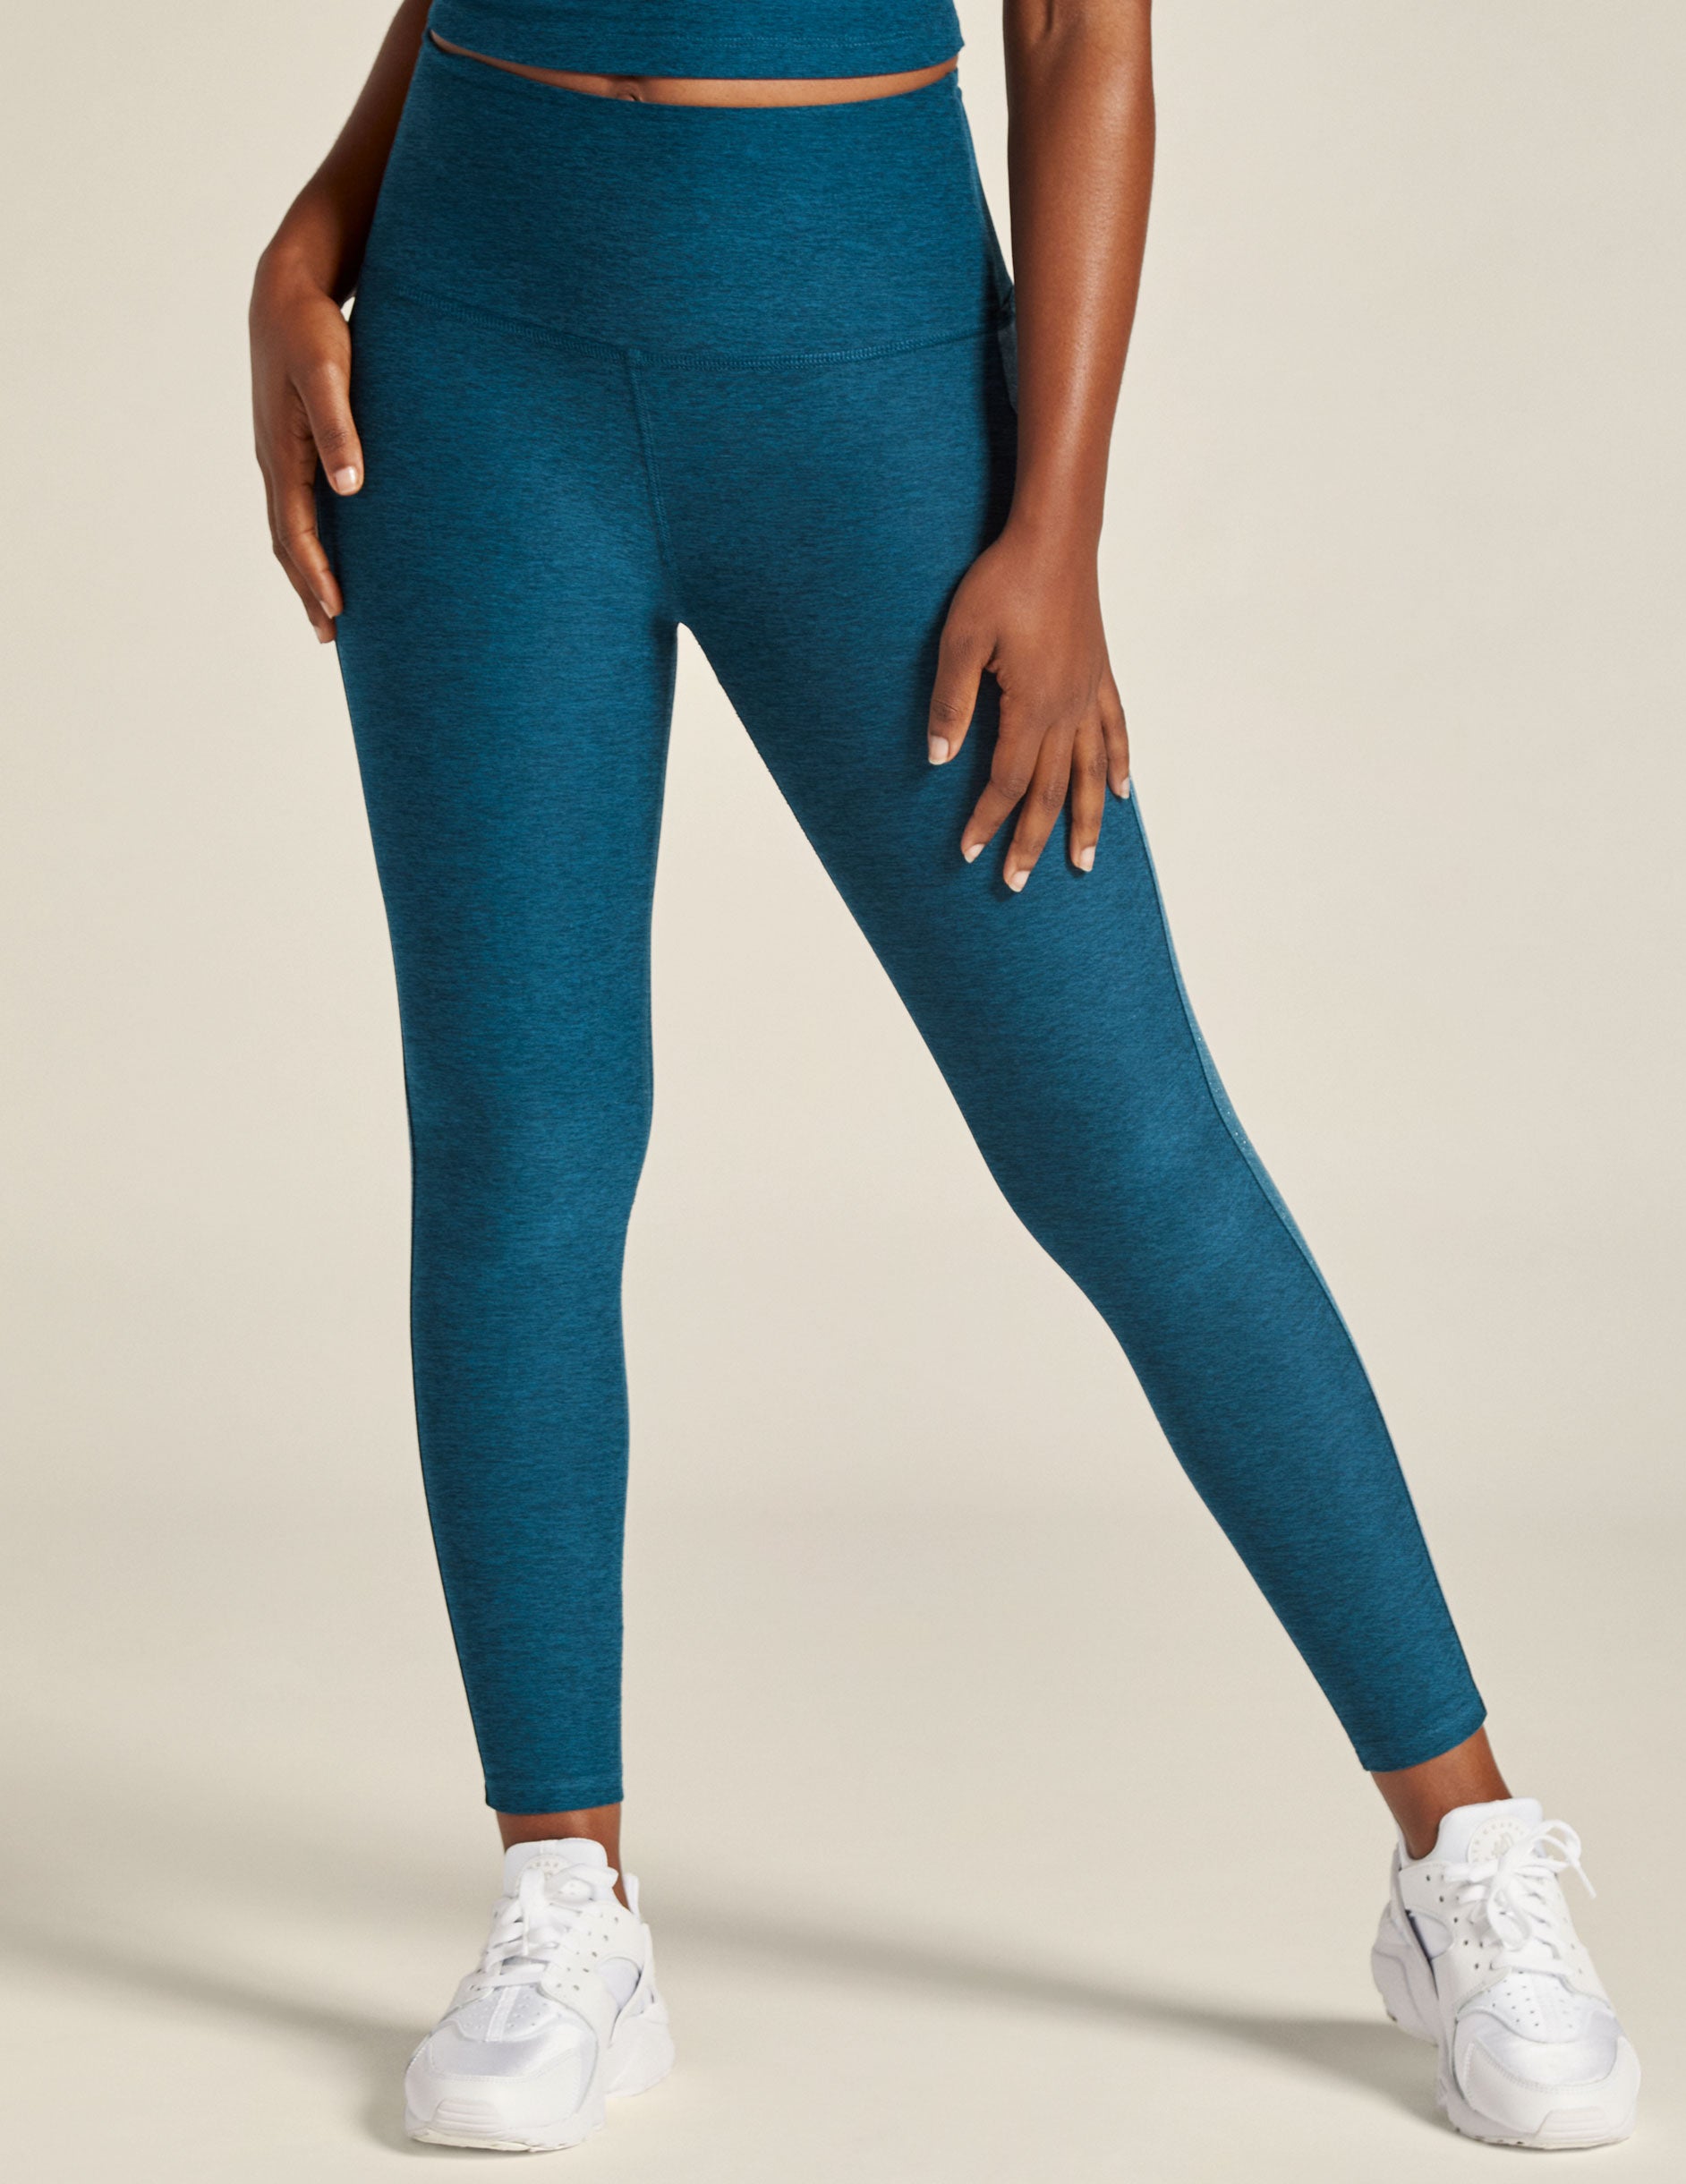 Beyond Yoga Blue Yoga Pants Size XS - 63% off